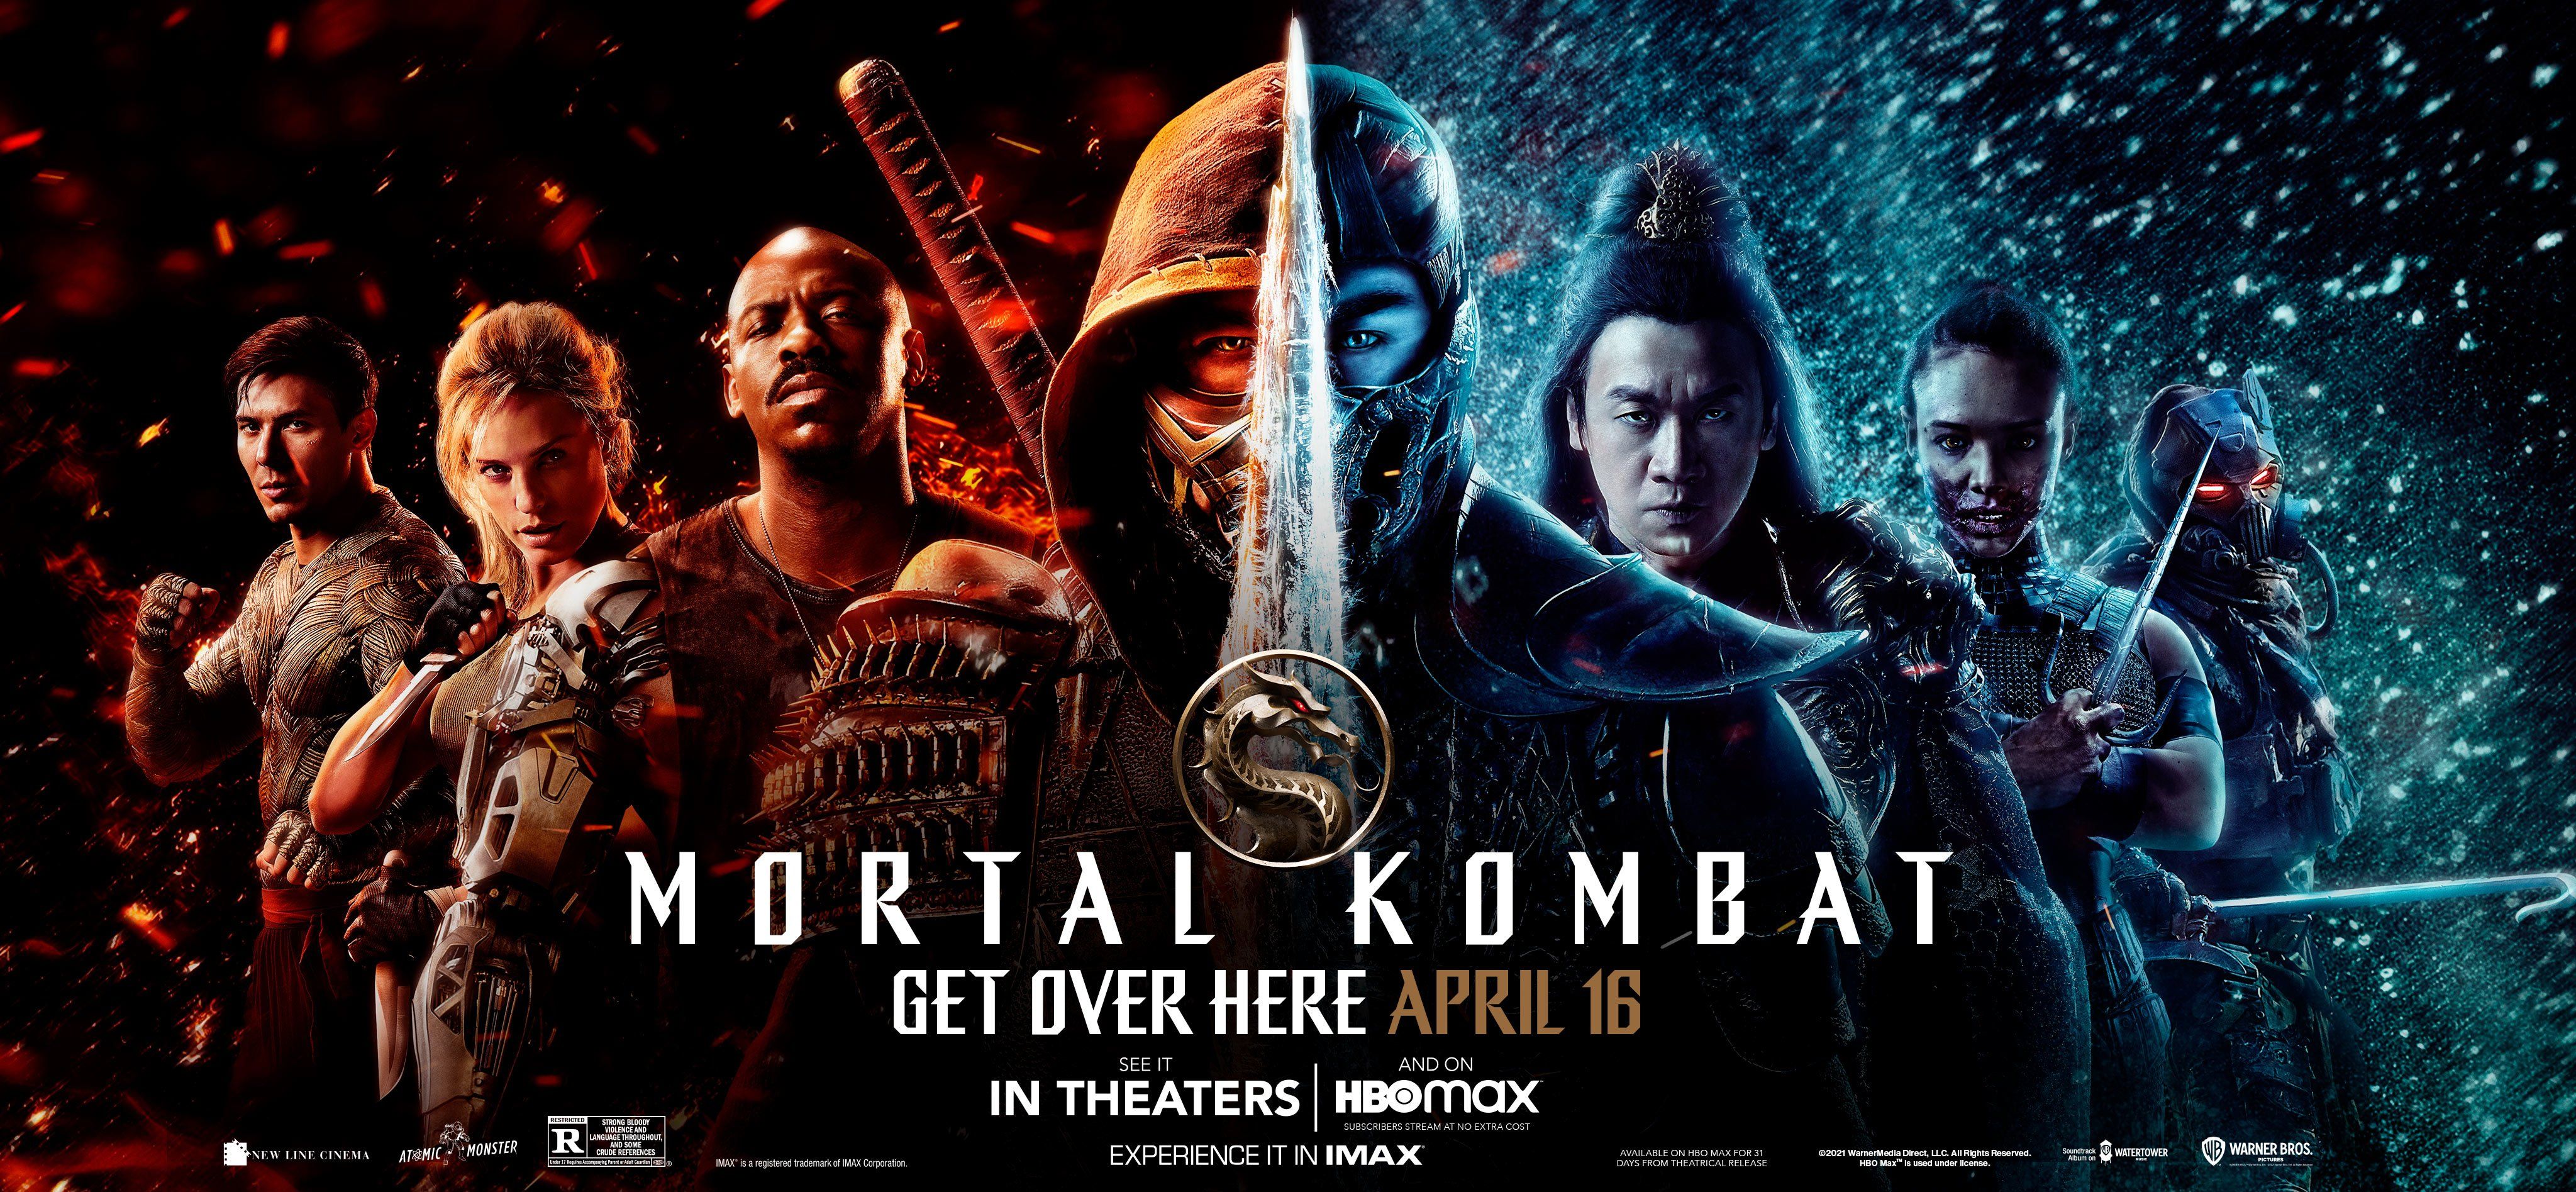 The Great Tournament Begins in New Mortal Kombat TV Spot